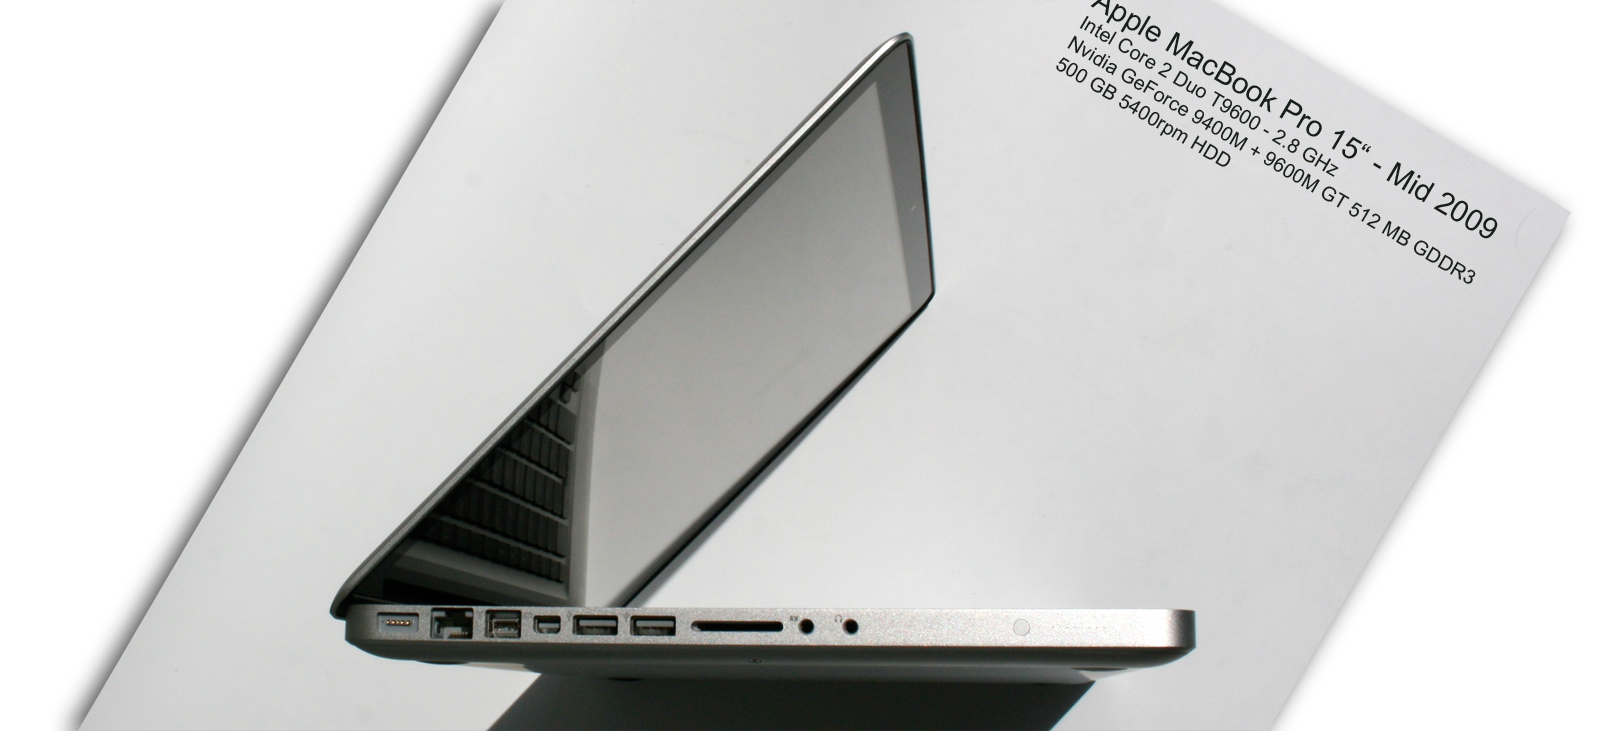 MacBookpro 2009 15インチ